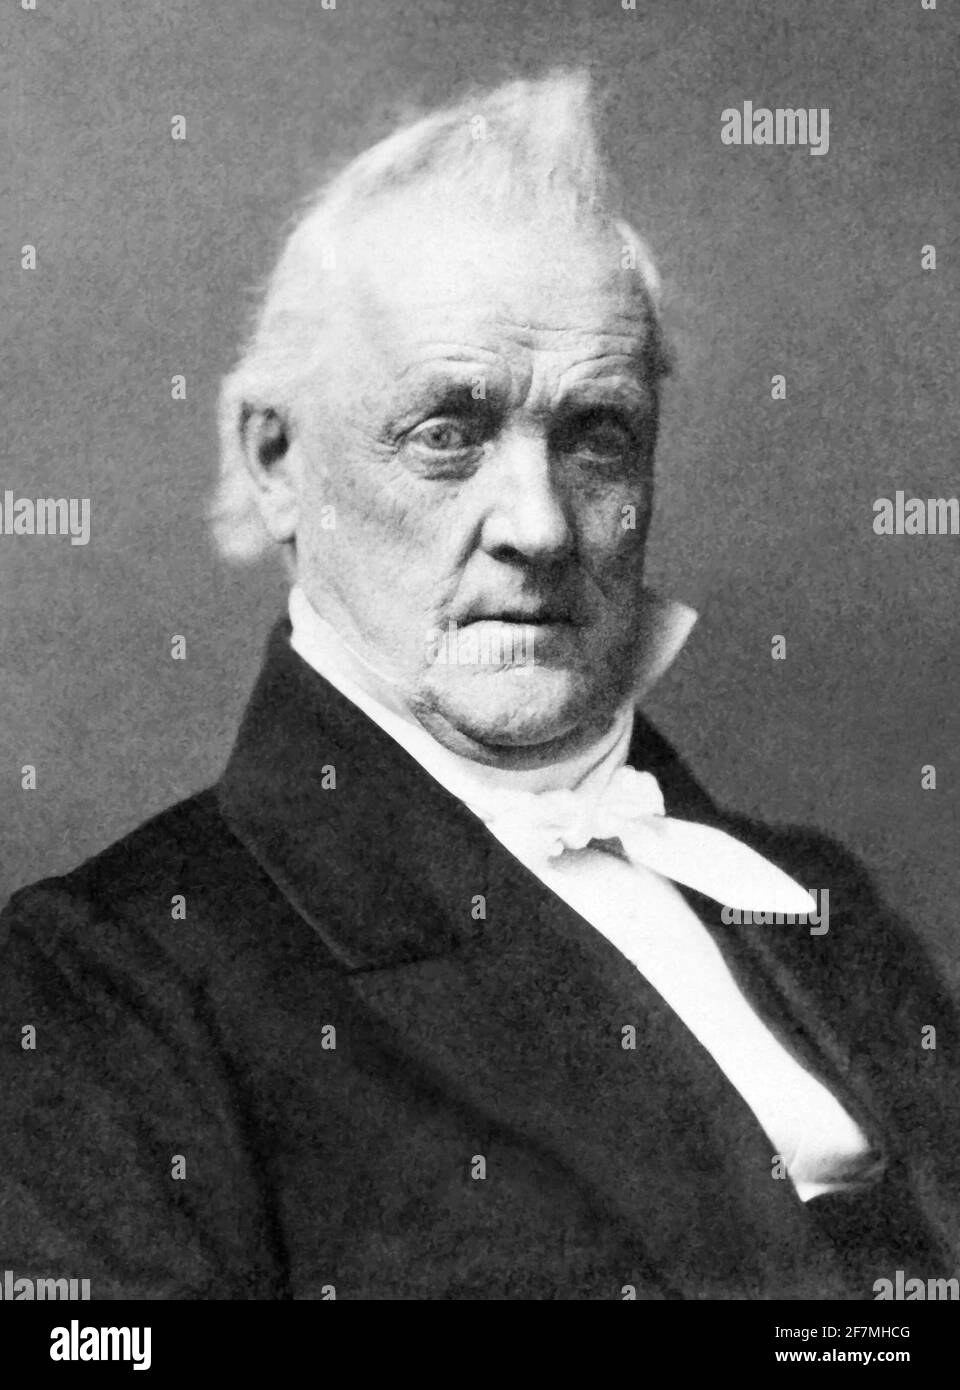 Vintage portrait photo of James Buchanan (1791 – 1868) – the 15th US President (1857 - 1861). Photo circa 1865. Stock Photo